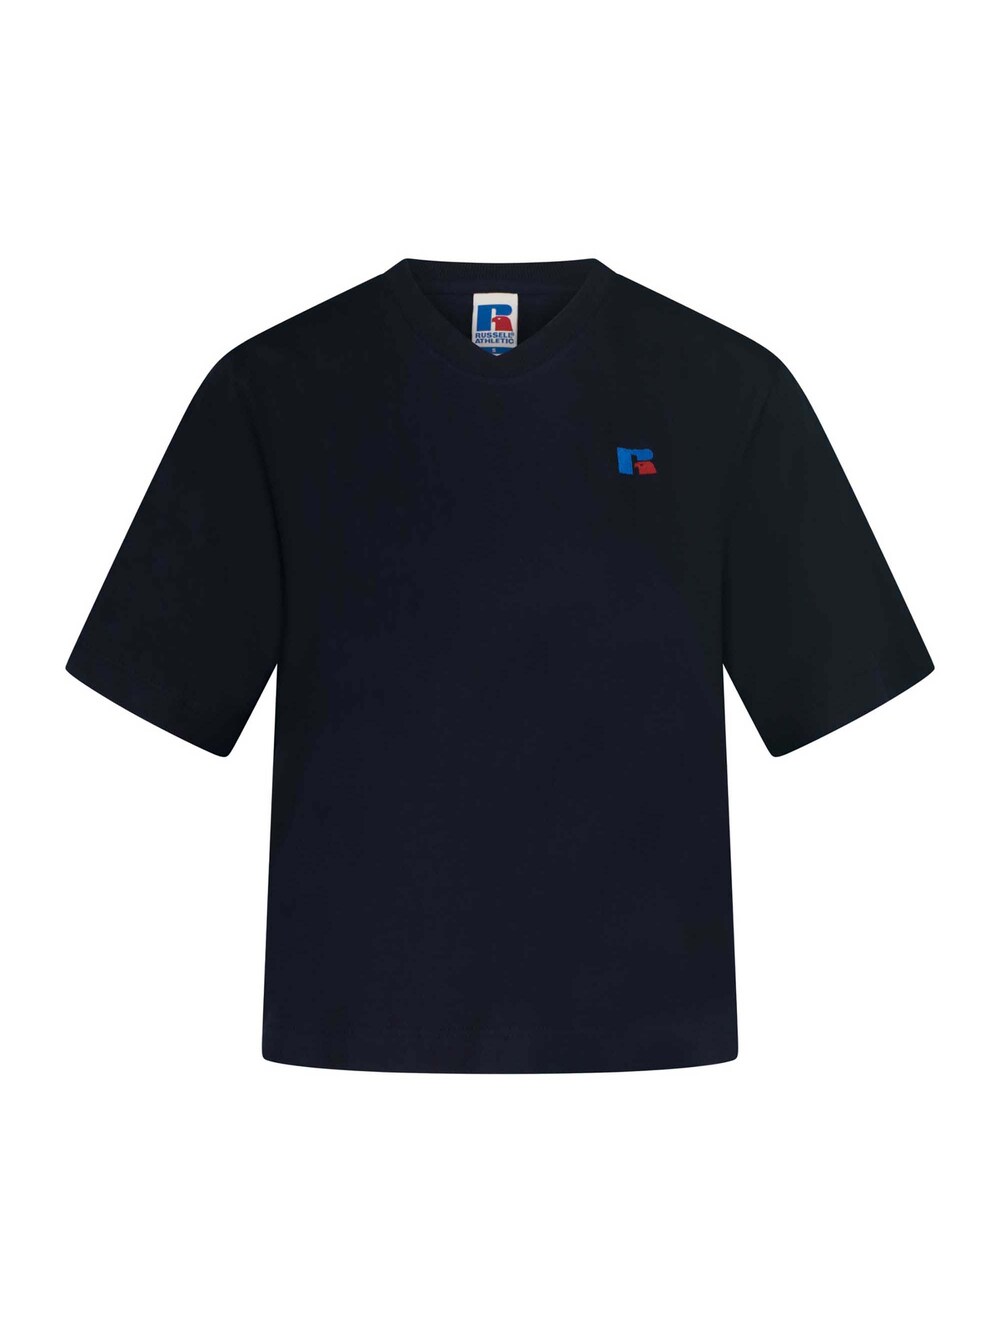 Рубашка Russell Athletic, темно-синий